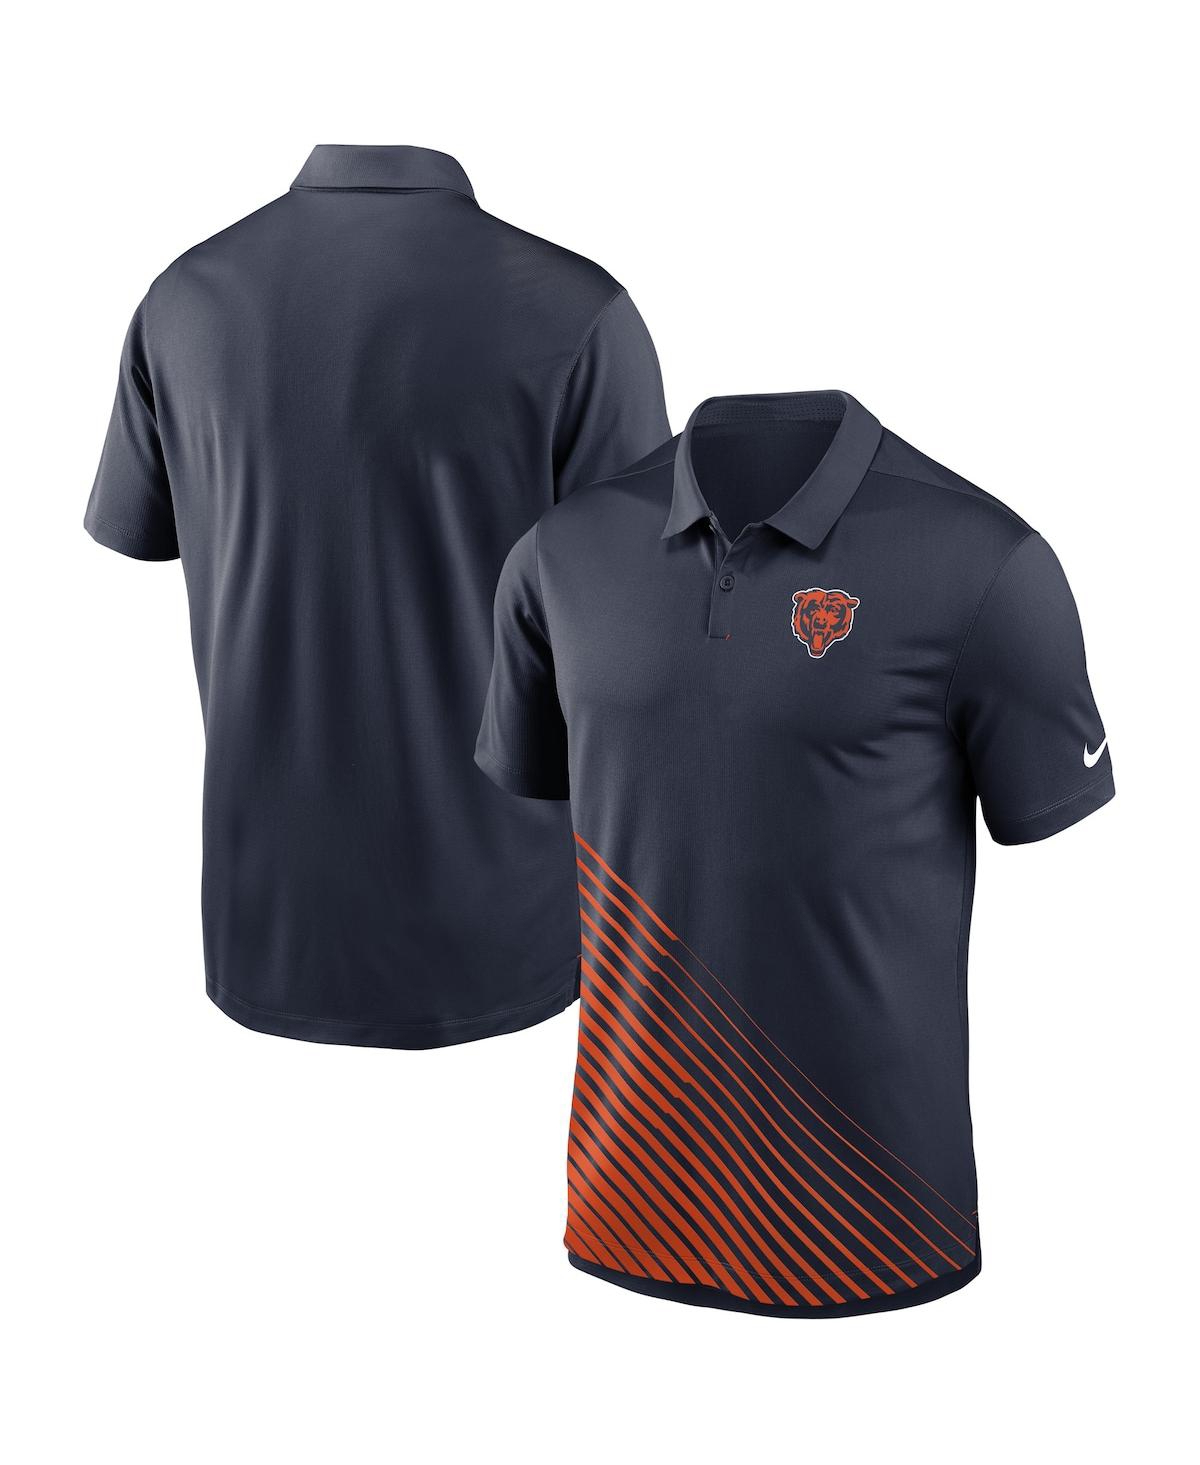 Men's Los Angeles Rams Nike Cream/Heathered Cream Sideline Coaches UV  Performance Long Sleeve T-Shirt